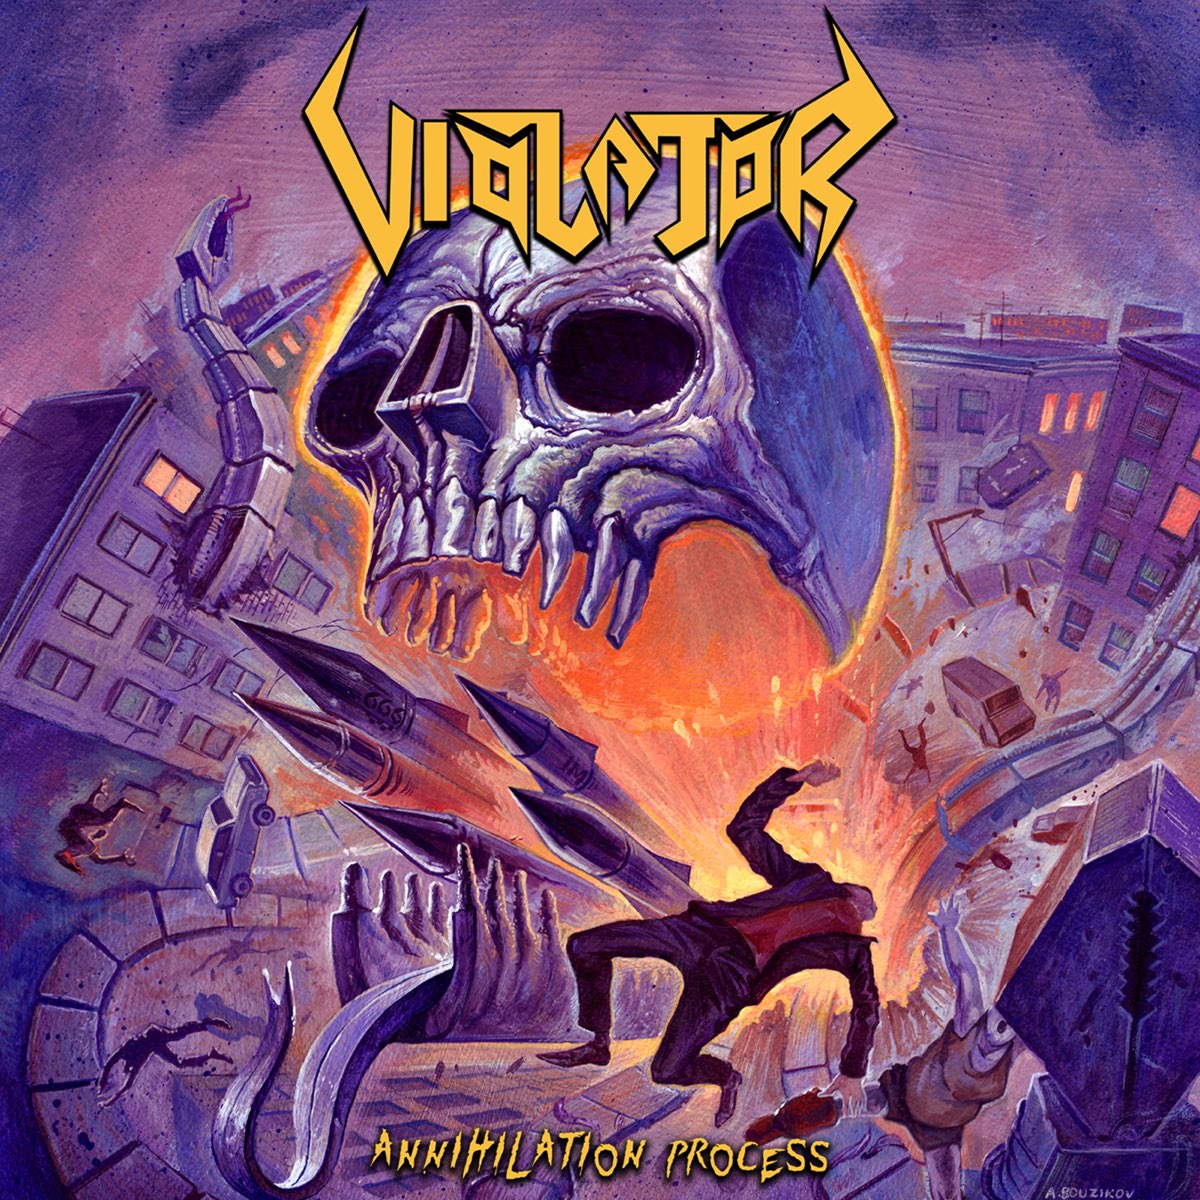 Включи annihilation. Violator [2010] Annihilation process. Violator Band. Annihilate обложка.